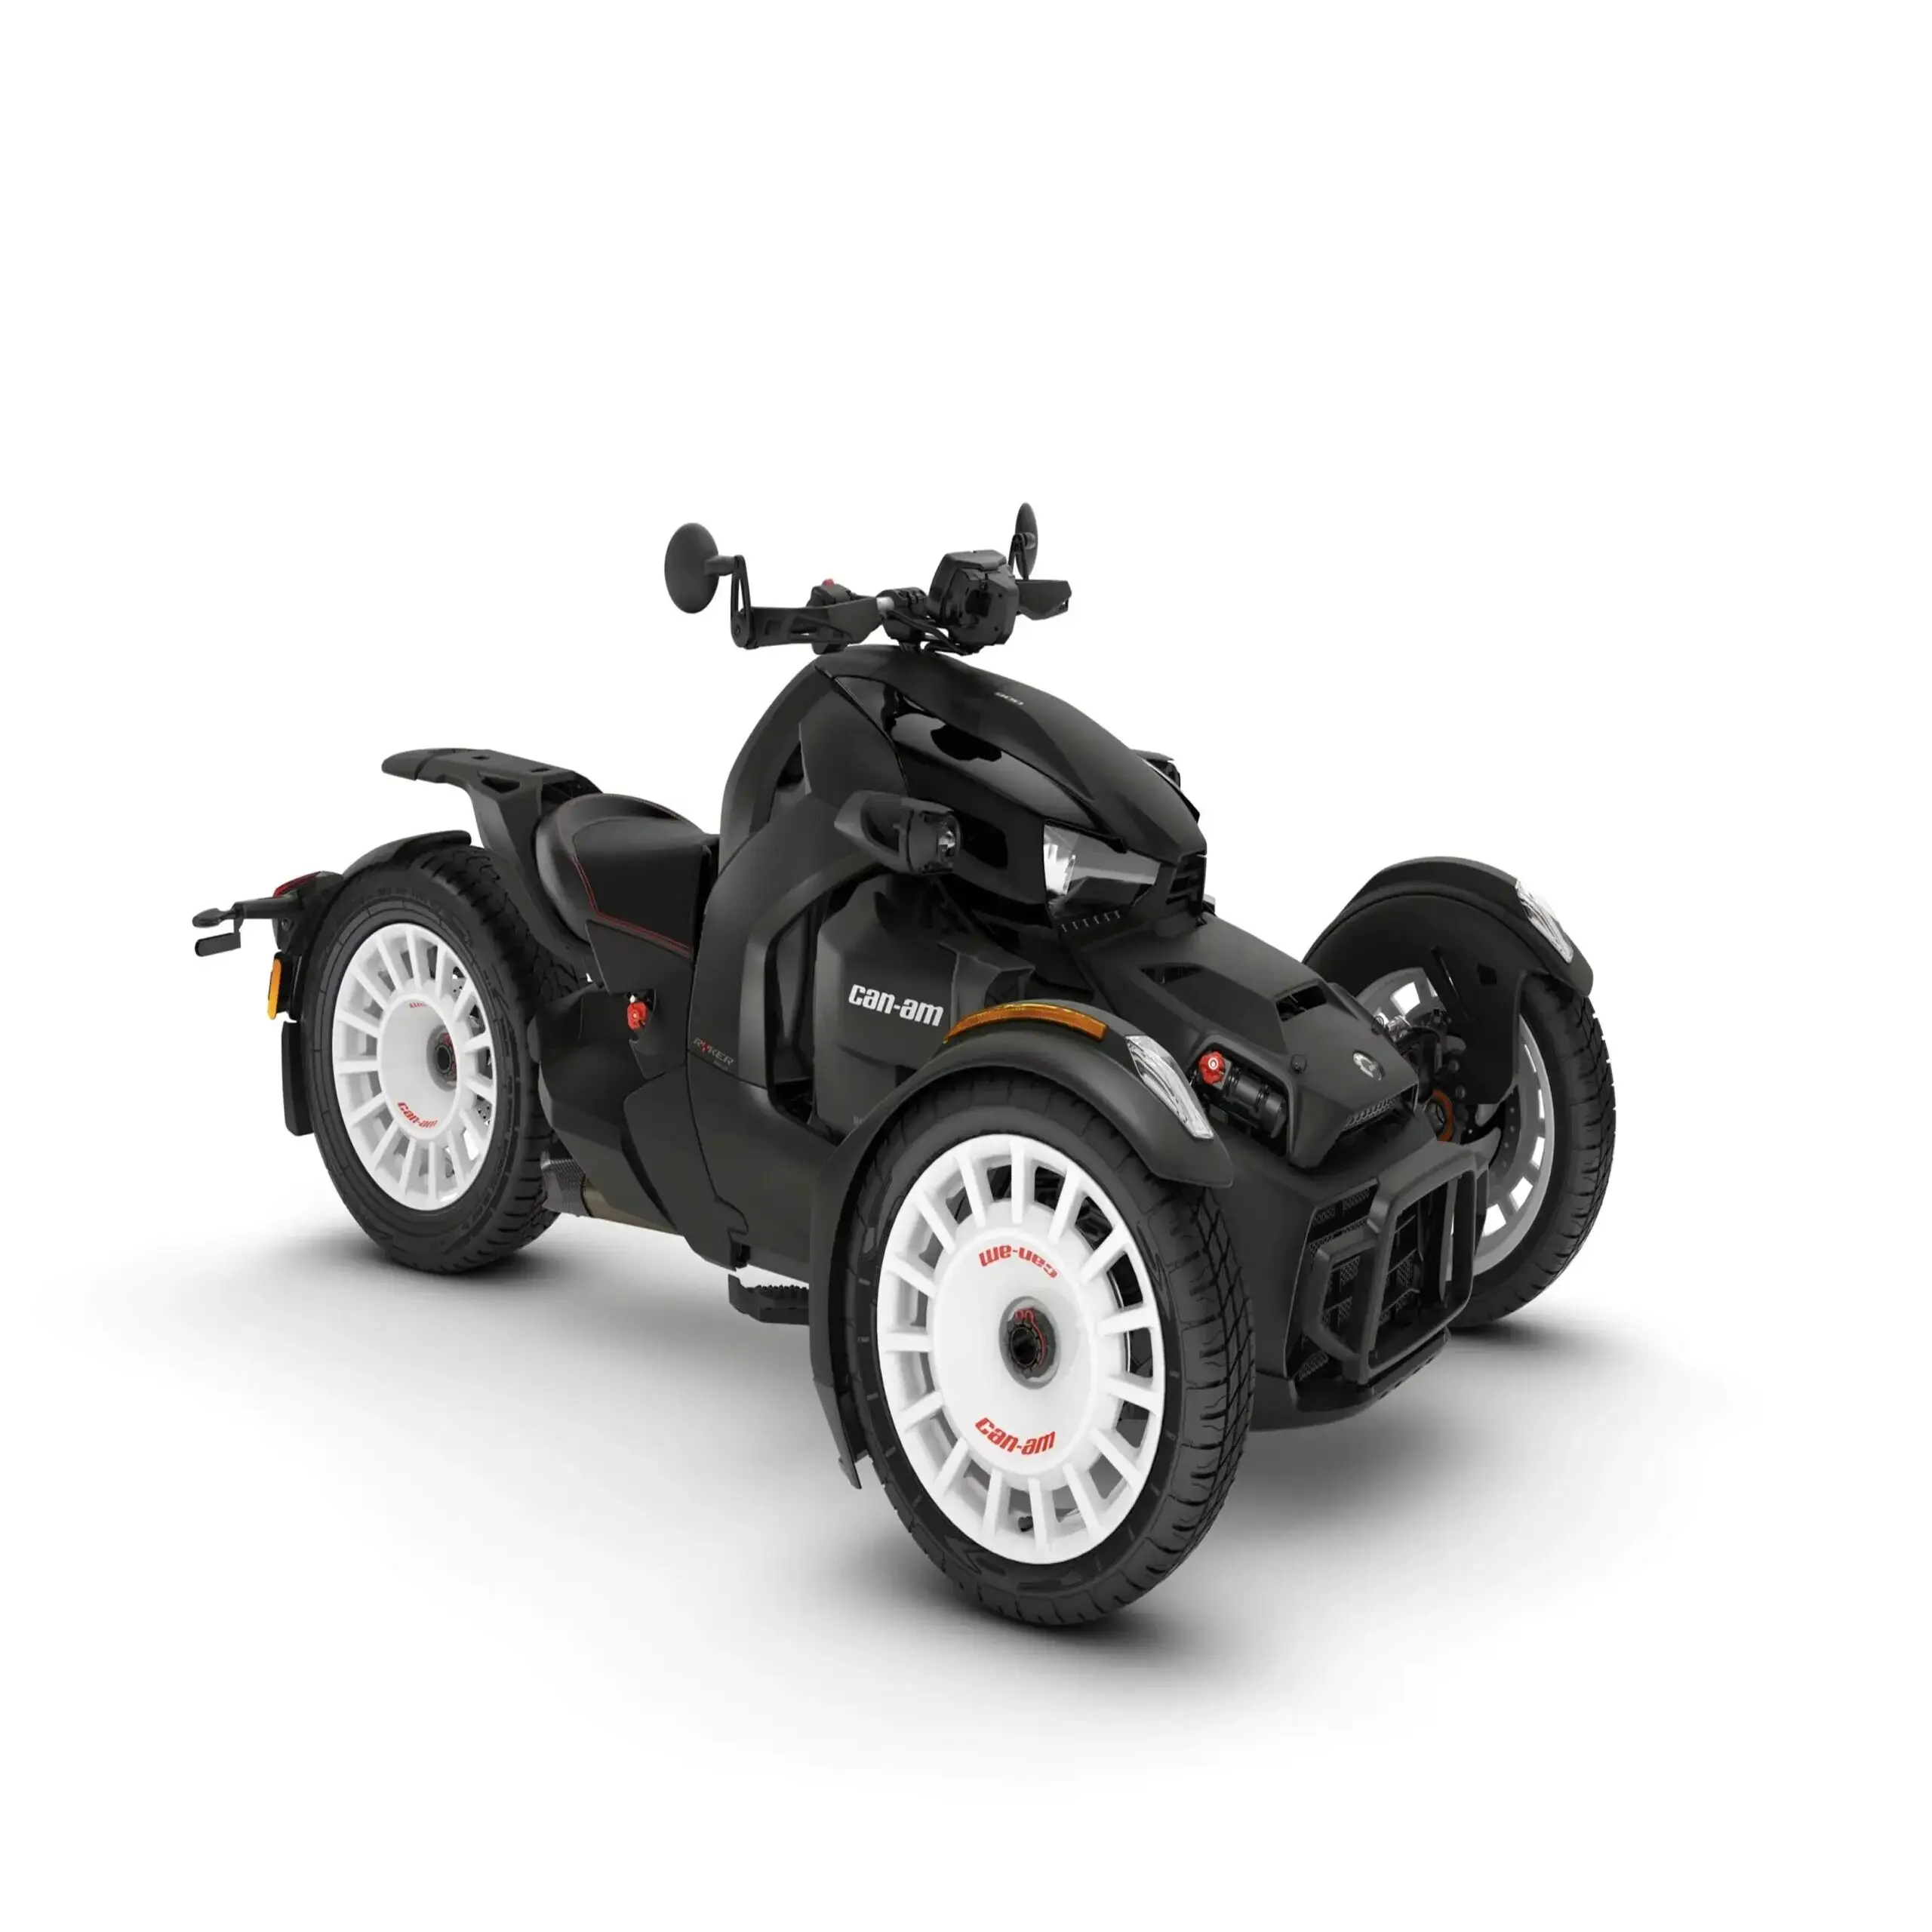 Pesan sekarang diskon kualitas 2023 yang disegel dari pabrik yaitu Ryker Rally Rotax 900 ACE ATV. Tersedia untuk pengiriman segera